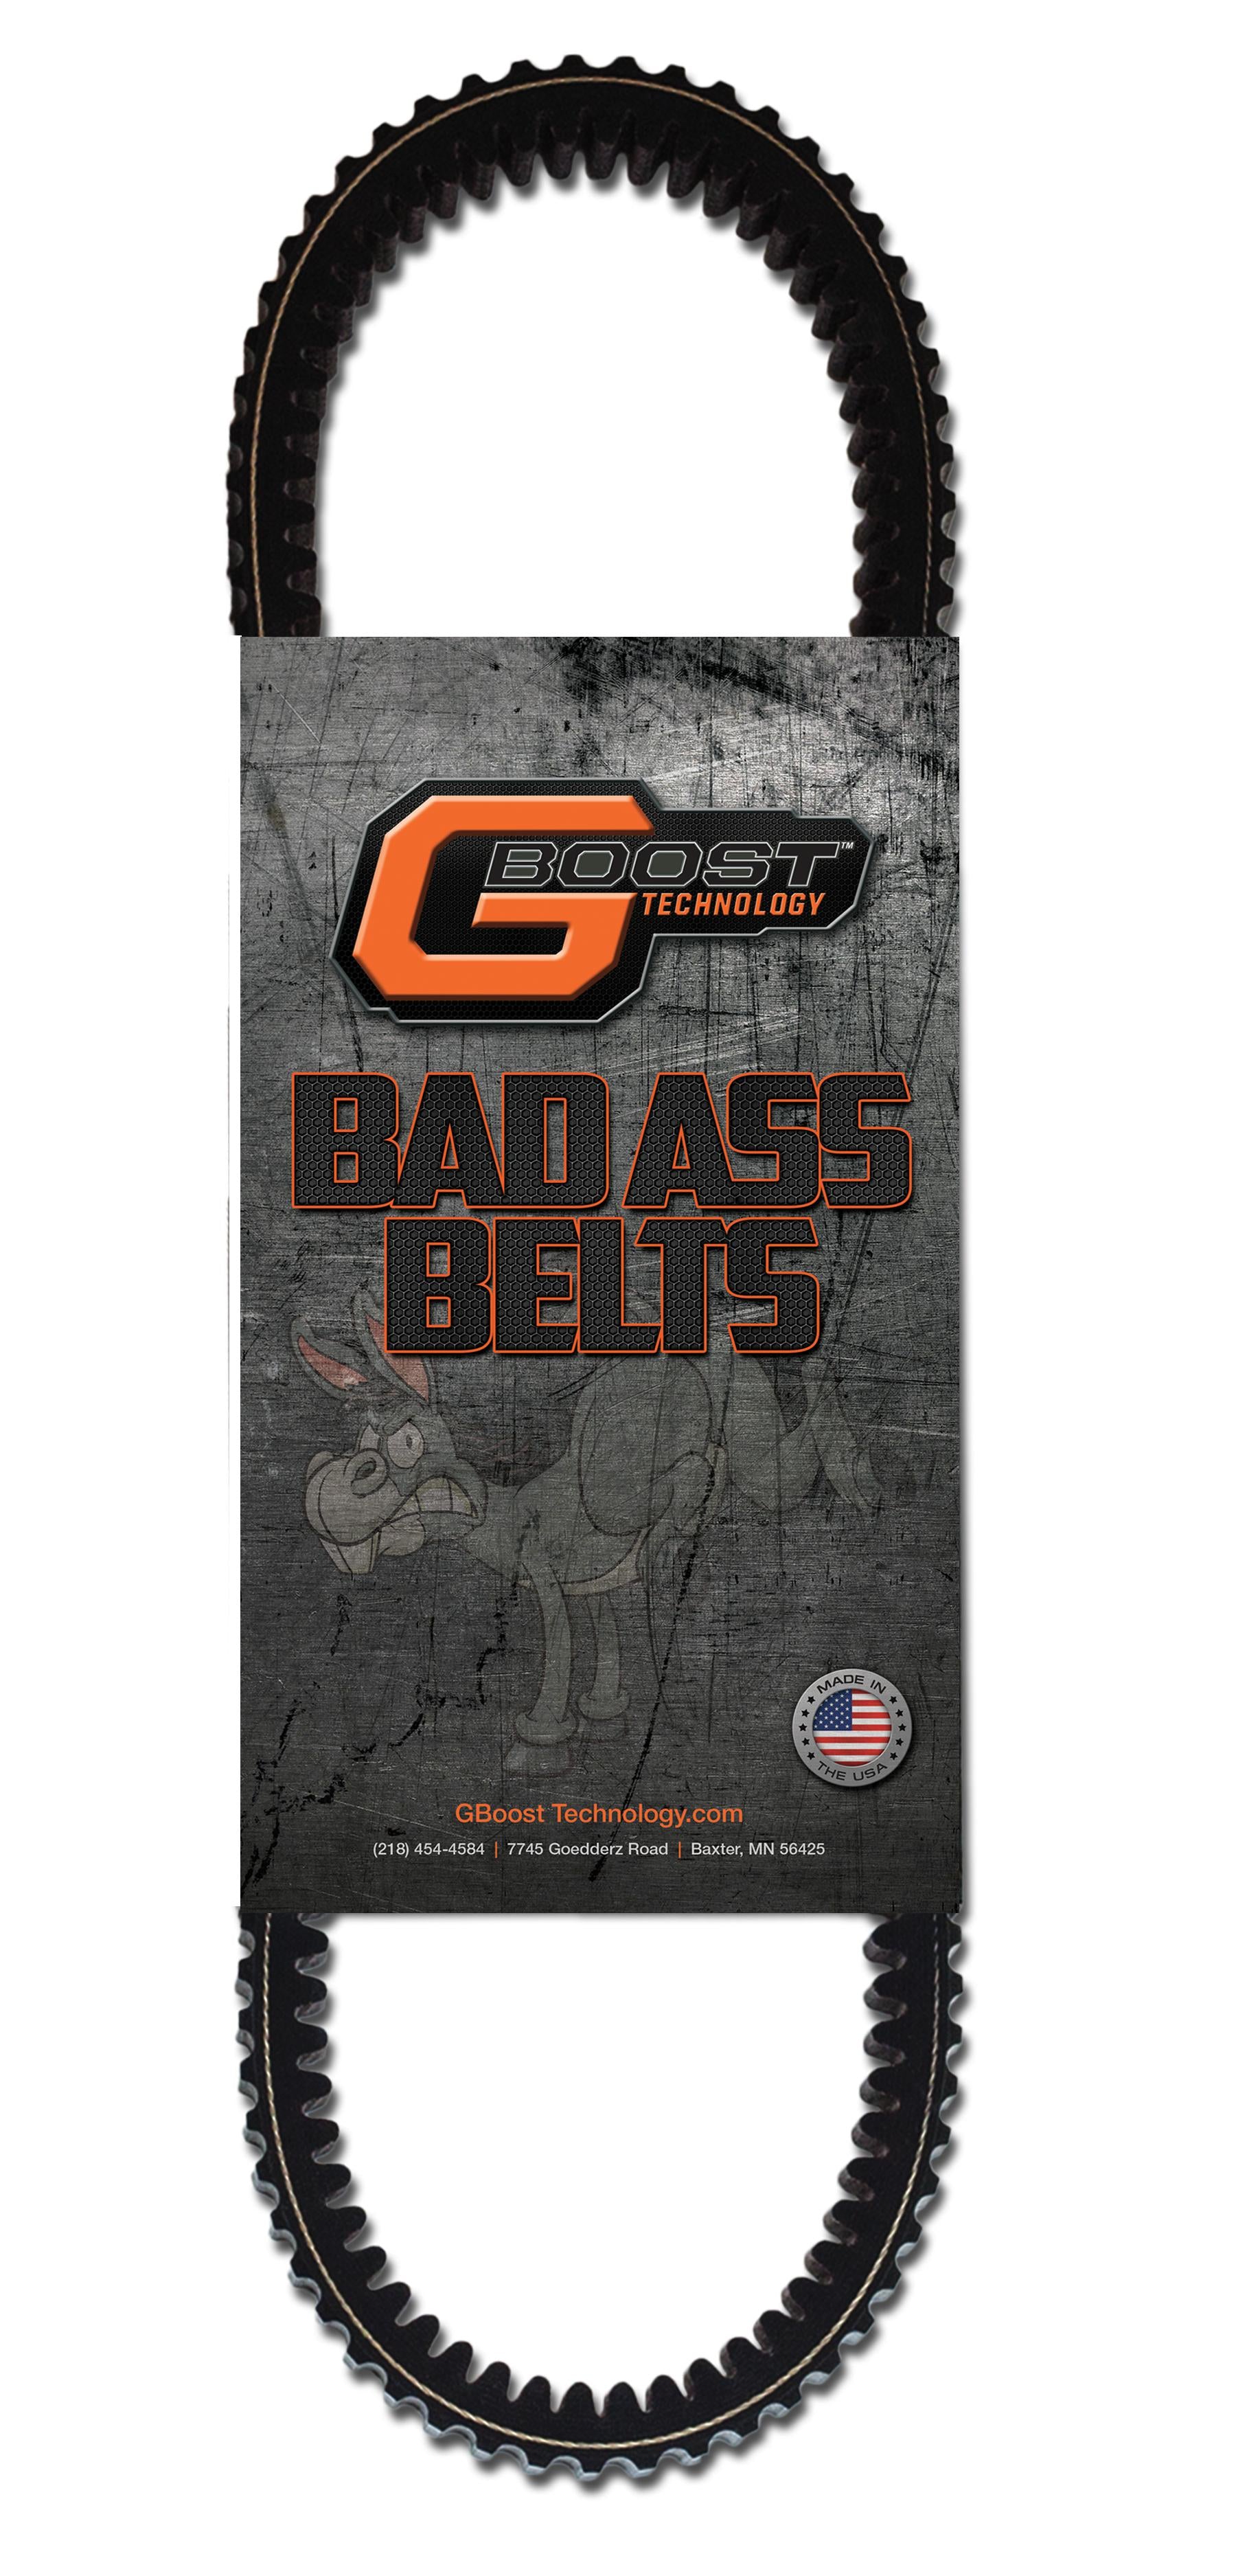 Big, Useless Belts Are Back